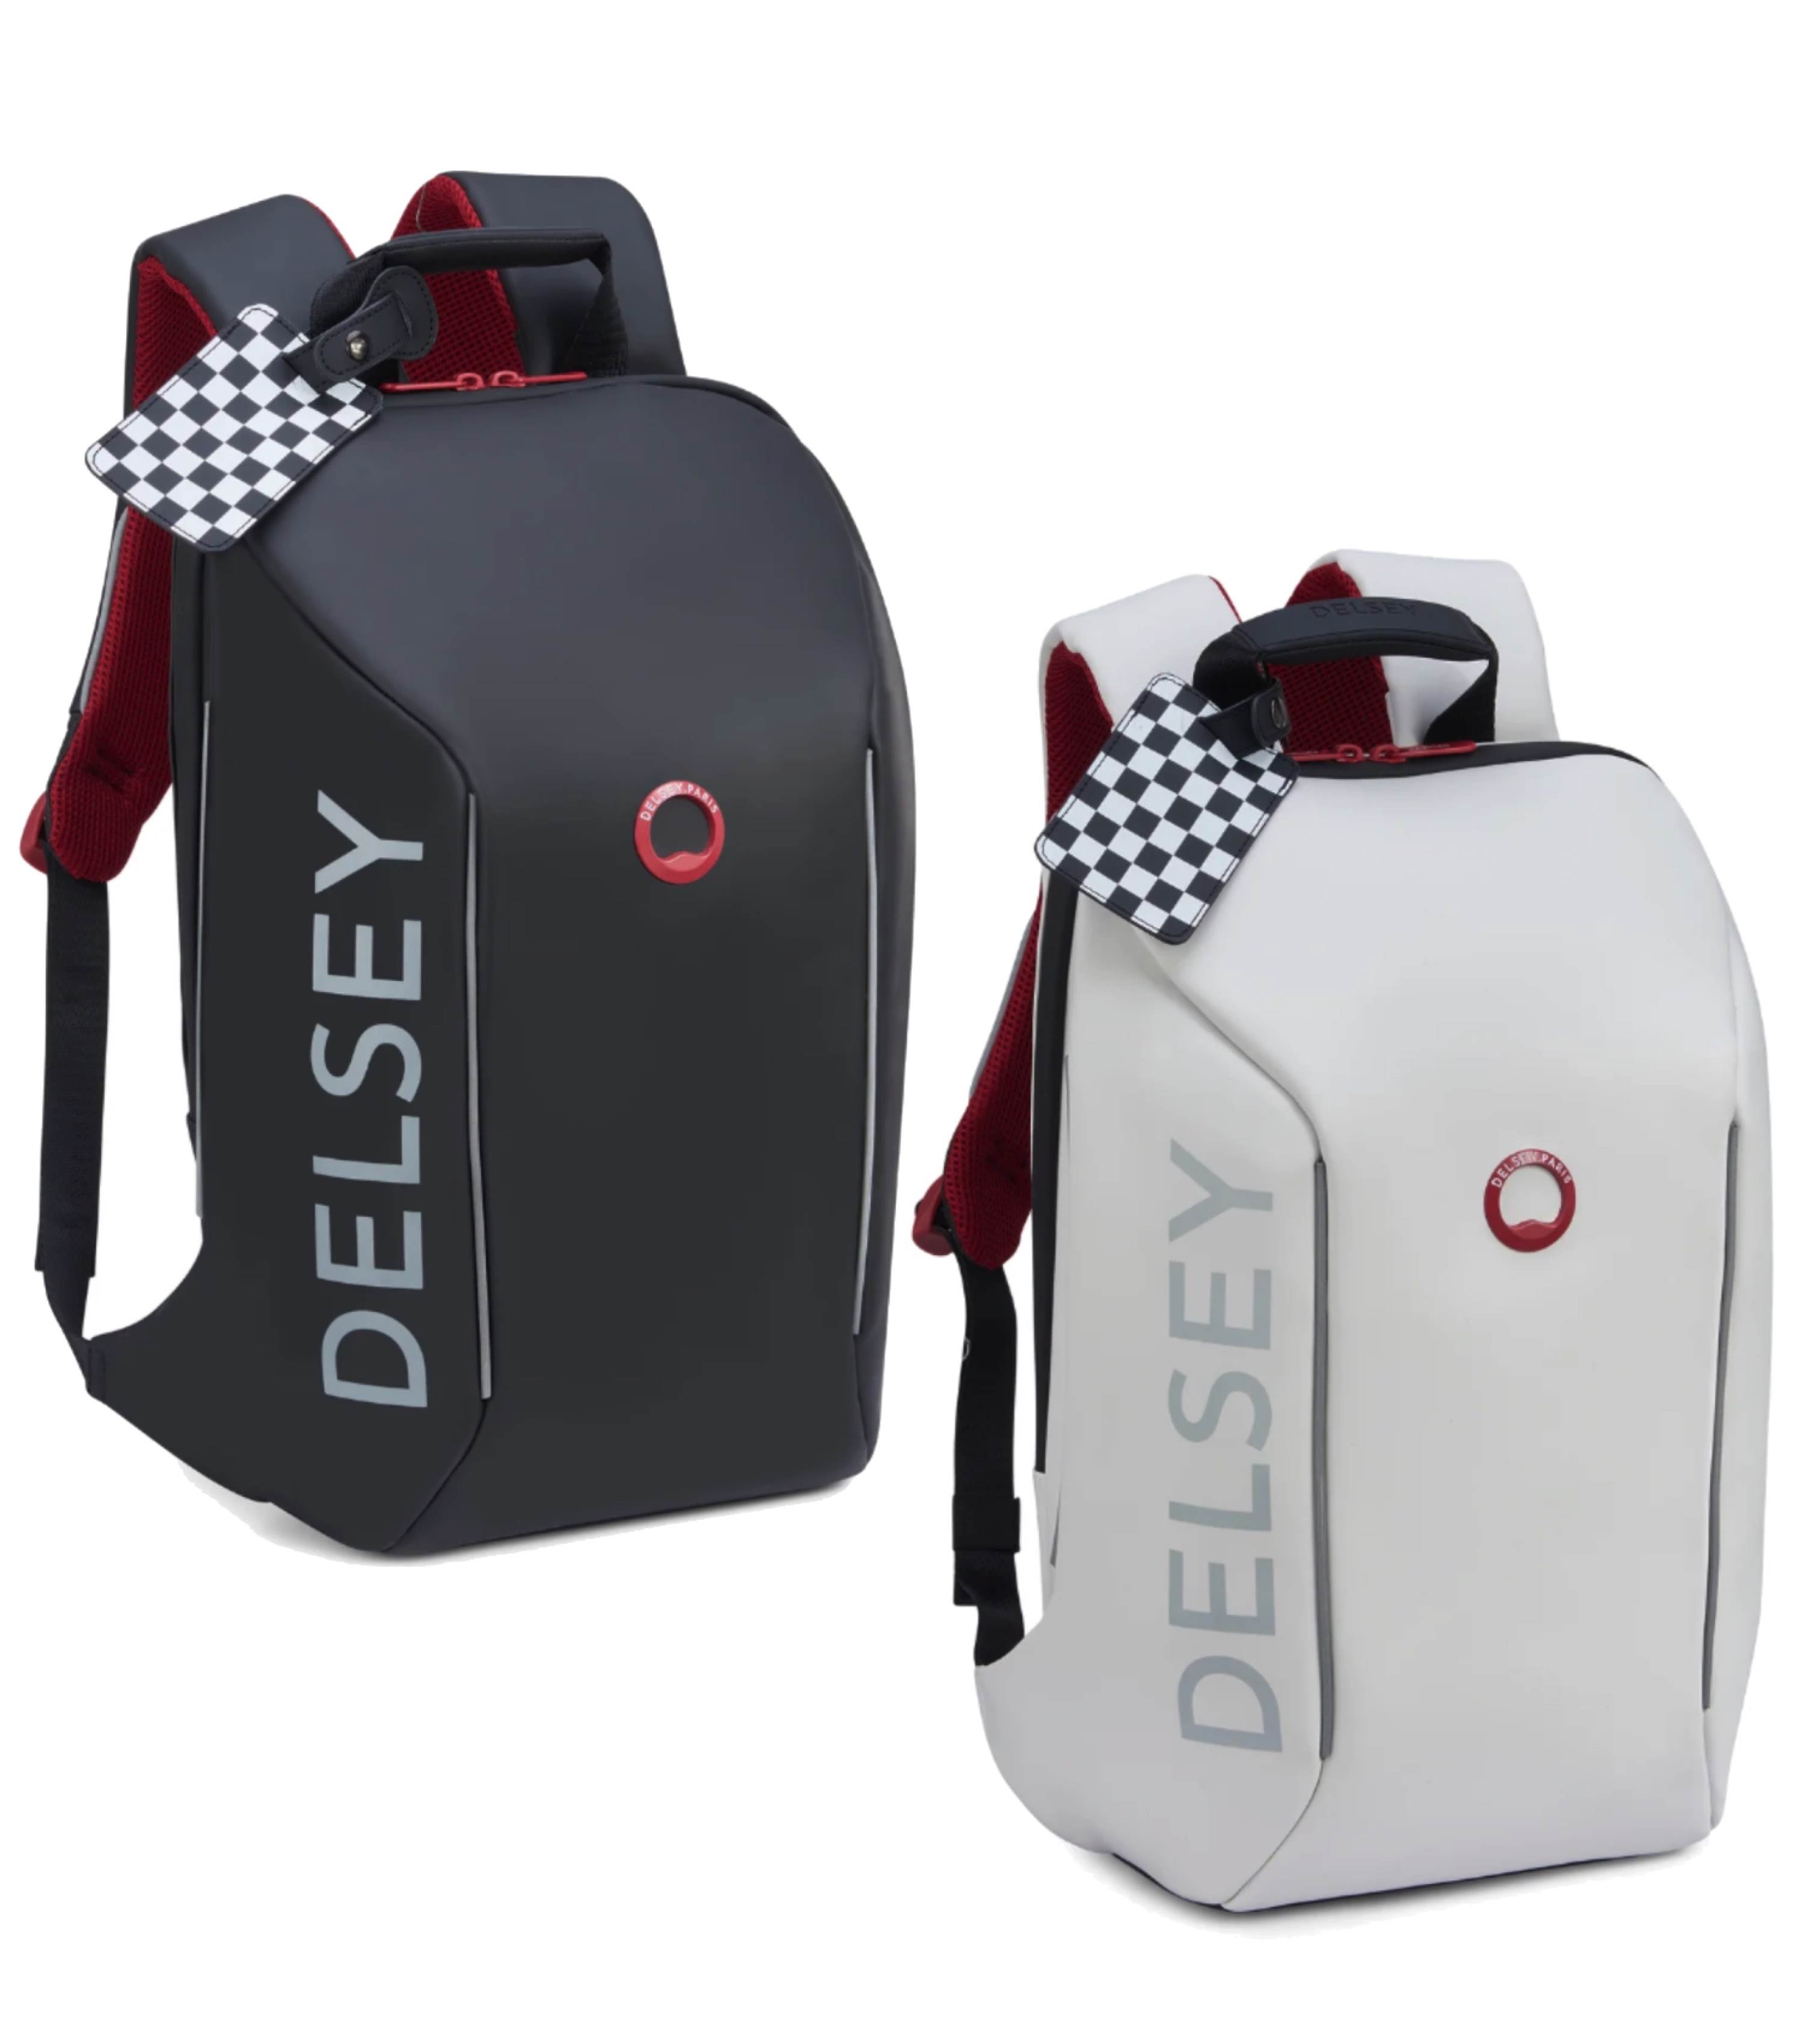 Delsey Paris Legere Se Chatelet Soft Air Travel Laptop Backpack Bookbag  Ivory | eBay